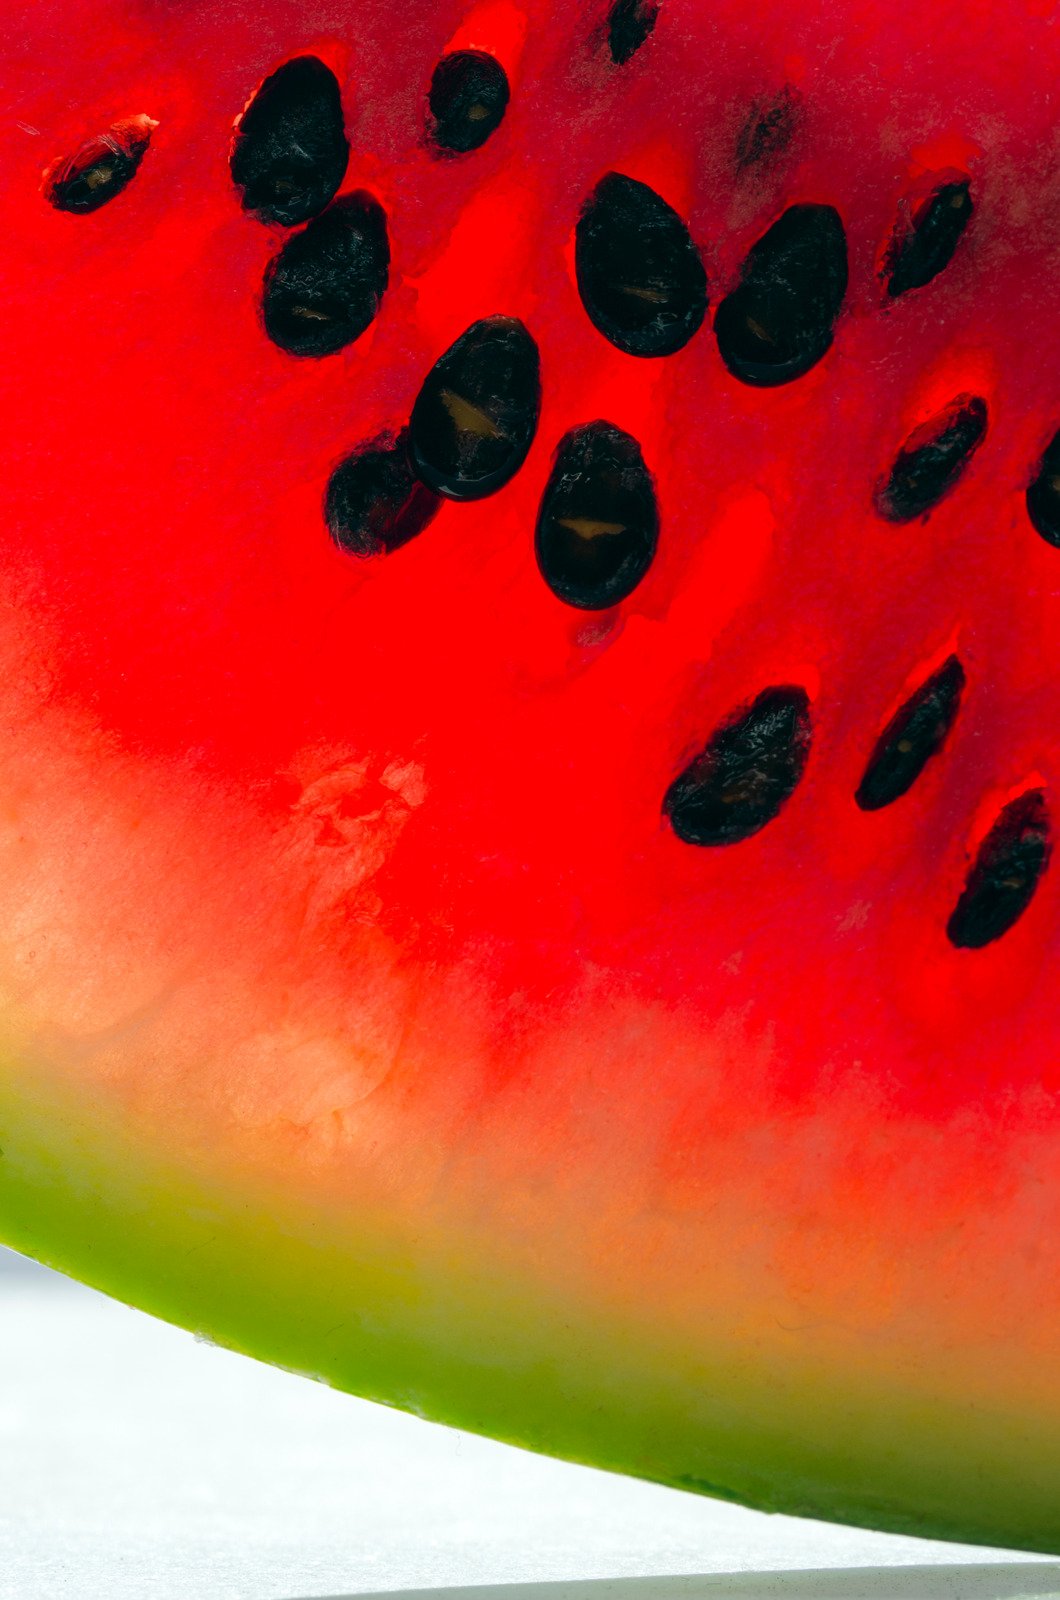 watermelon - Fotos do Canva